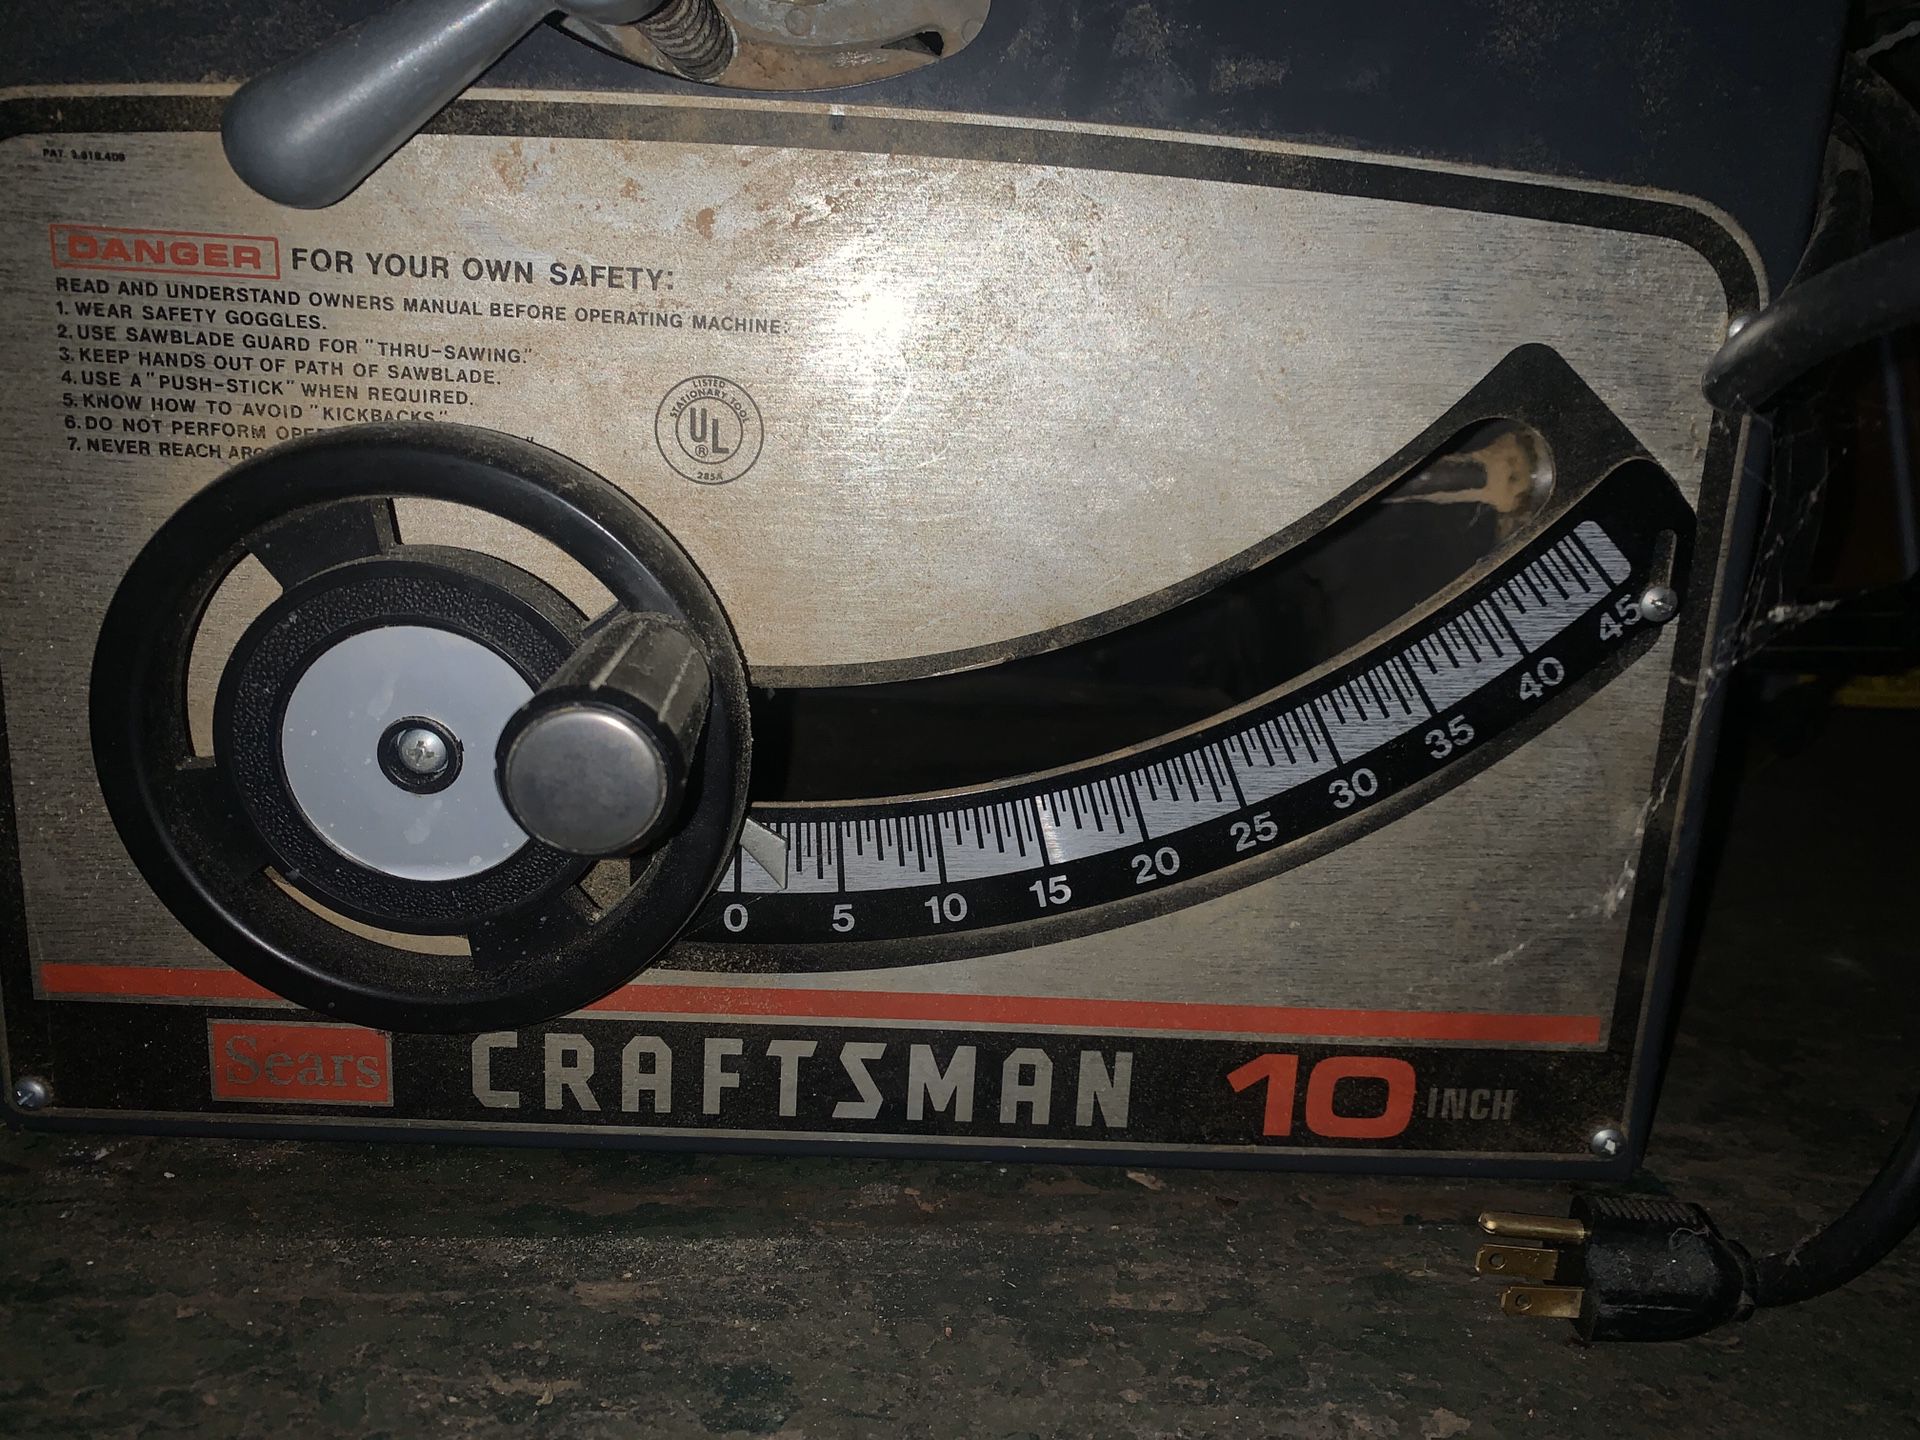 Craftsman portable table saw